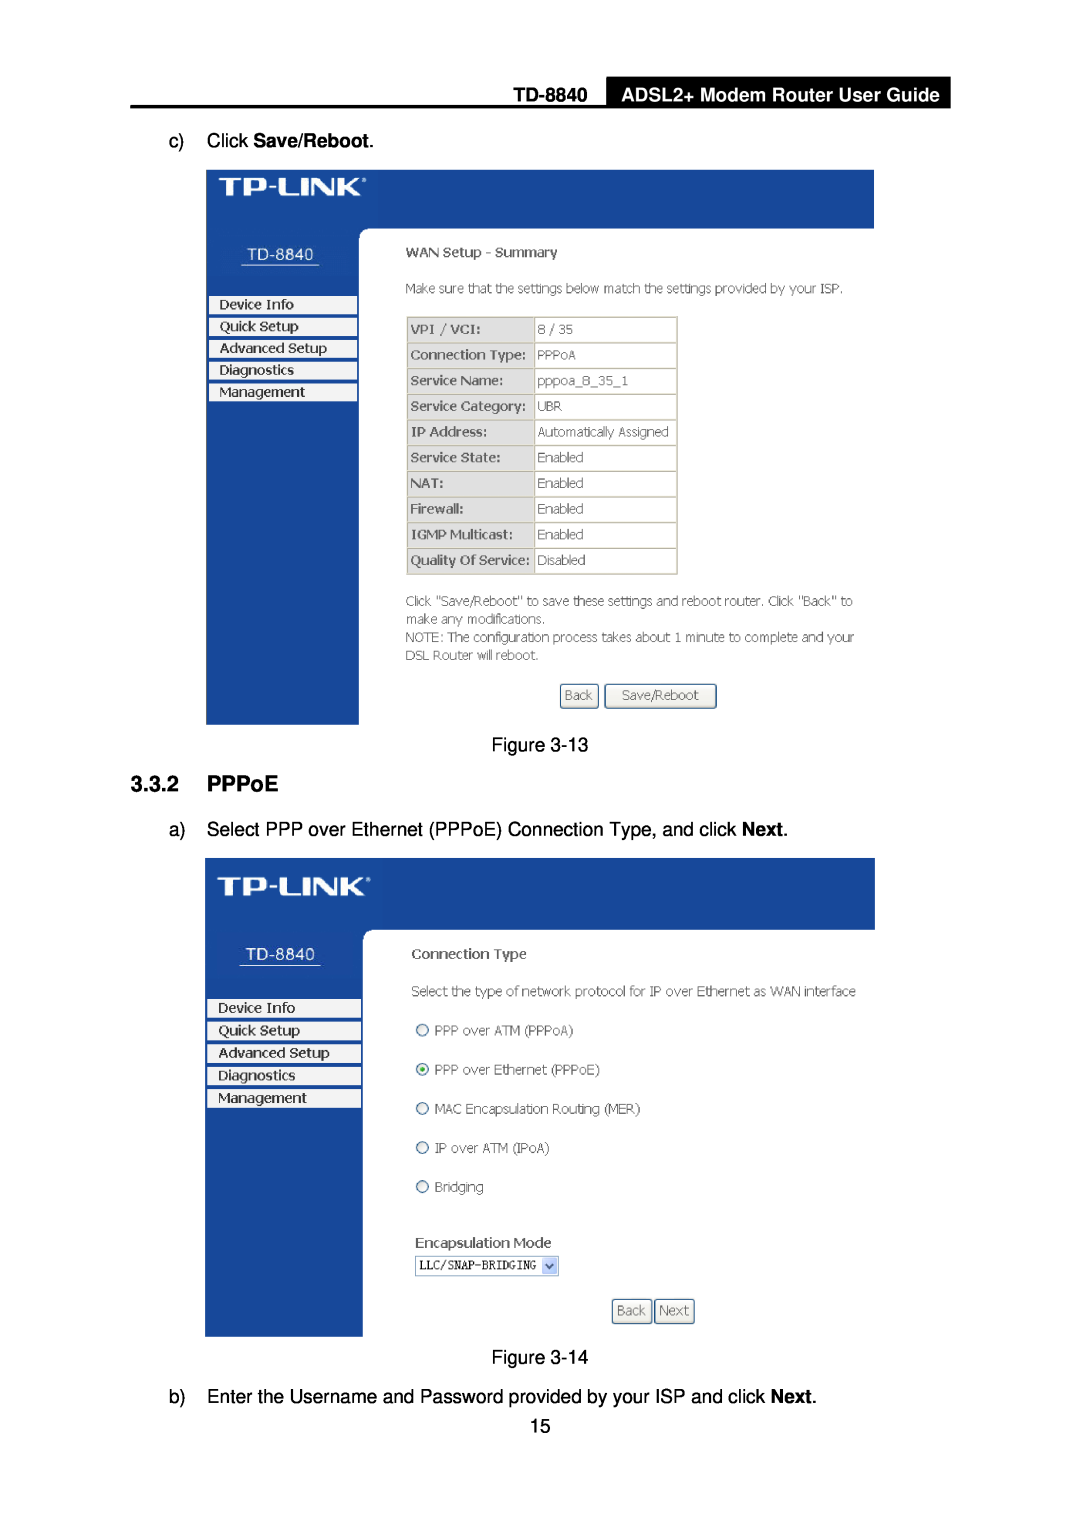 TP-Link TD-8840 manual 3.3.2PPPoE, ADSL2+ Modem Router User Guide, cClick Save/Reboot 